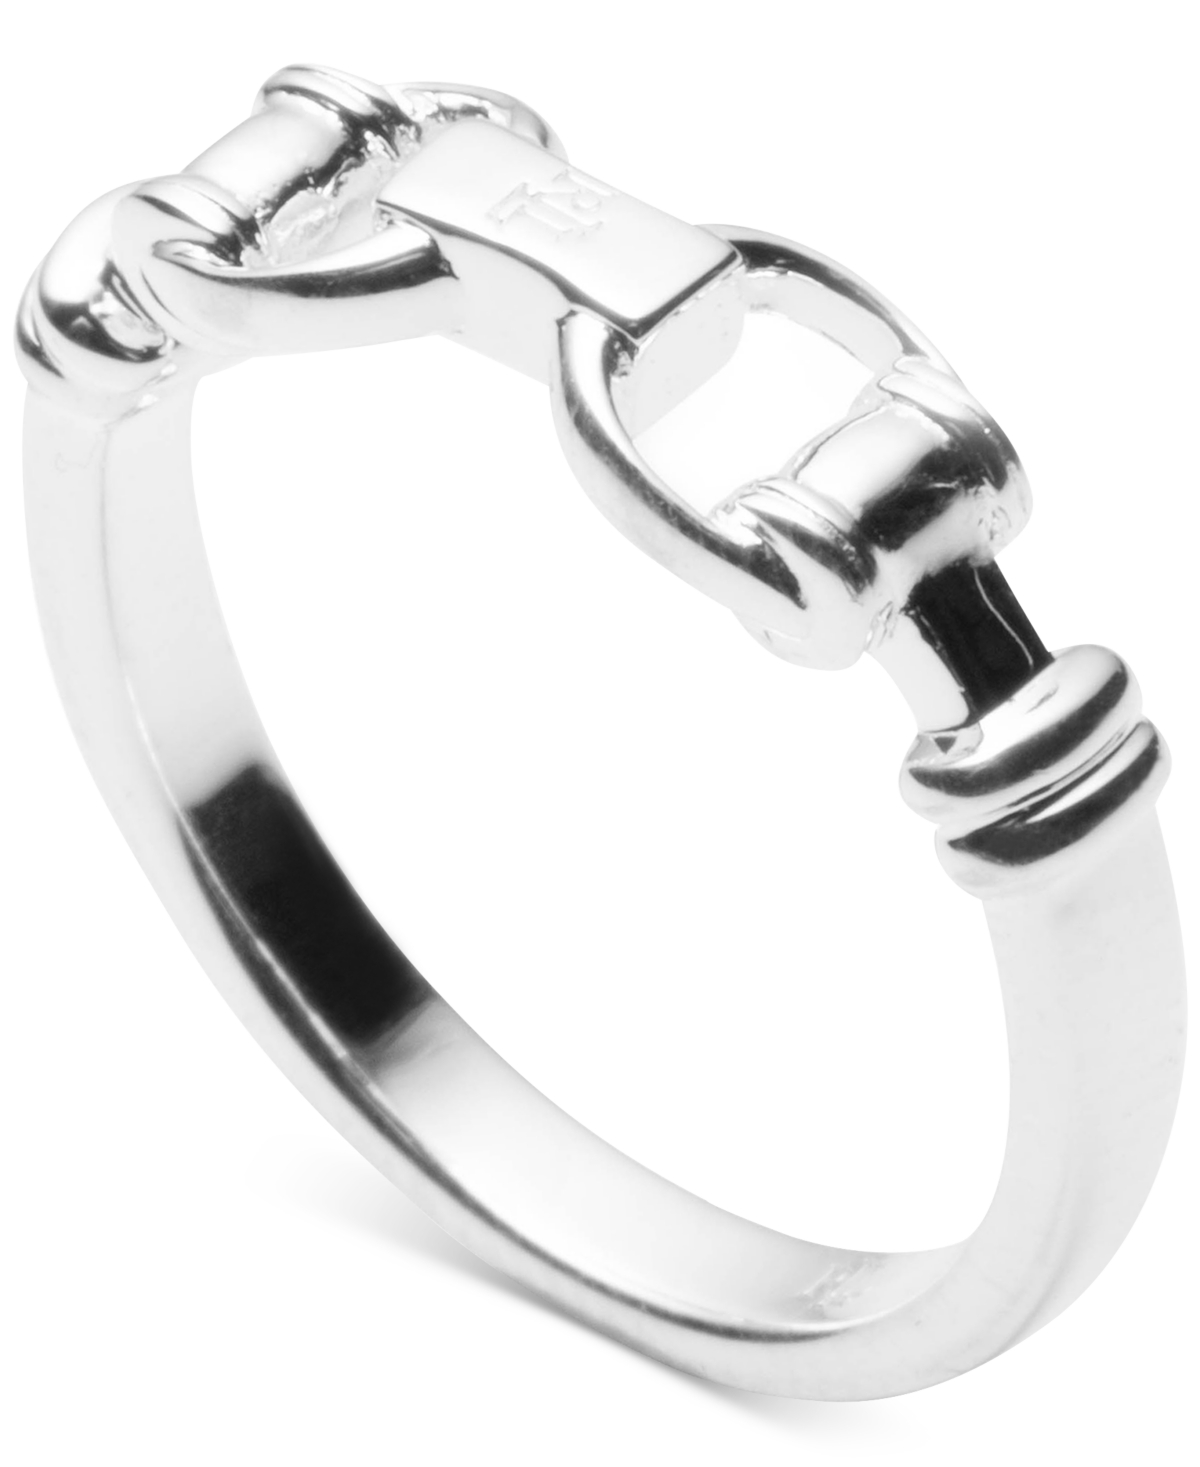 Lauren Ralph Lauren Horsebit Statement Ring in Sterling Silver - Sterling Silver